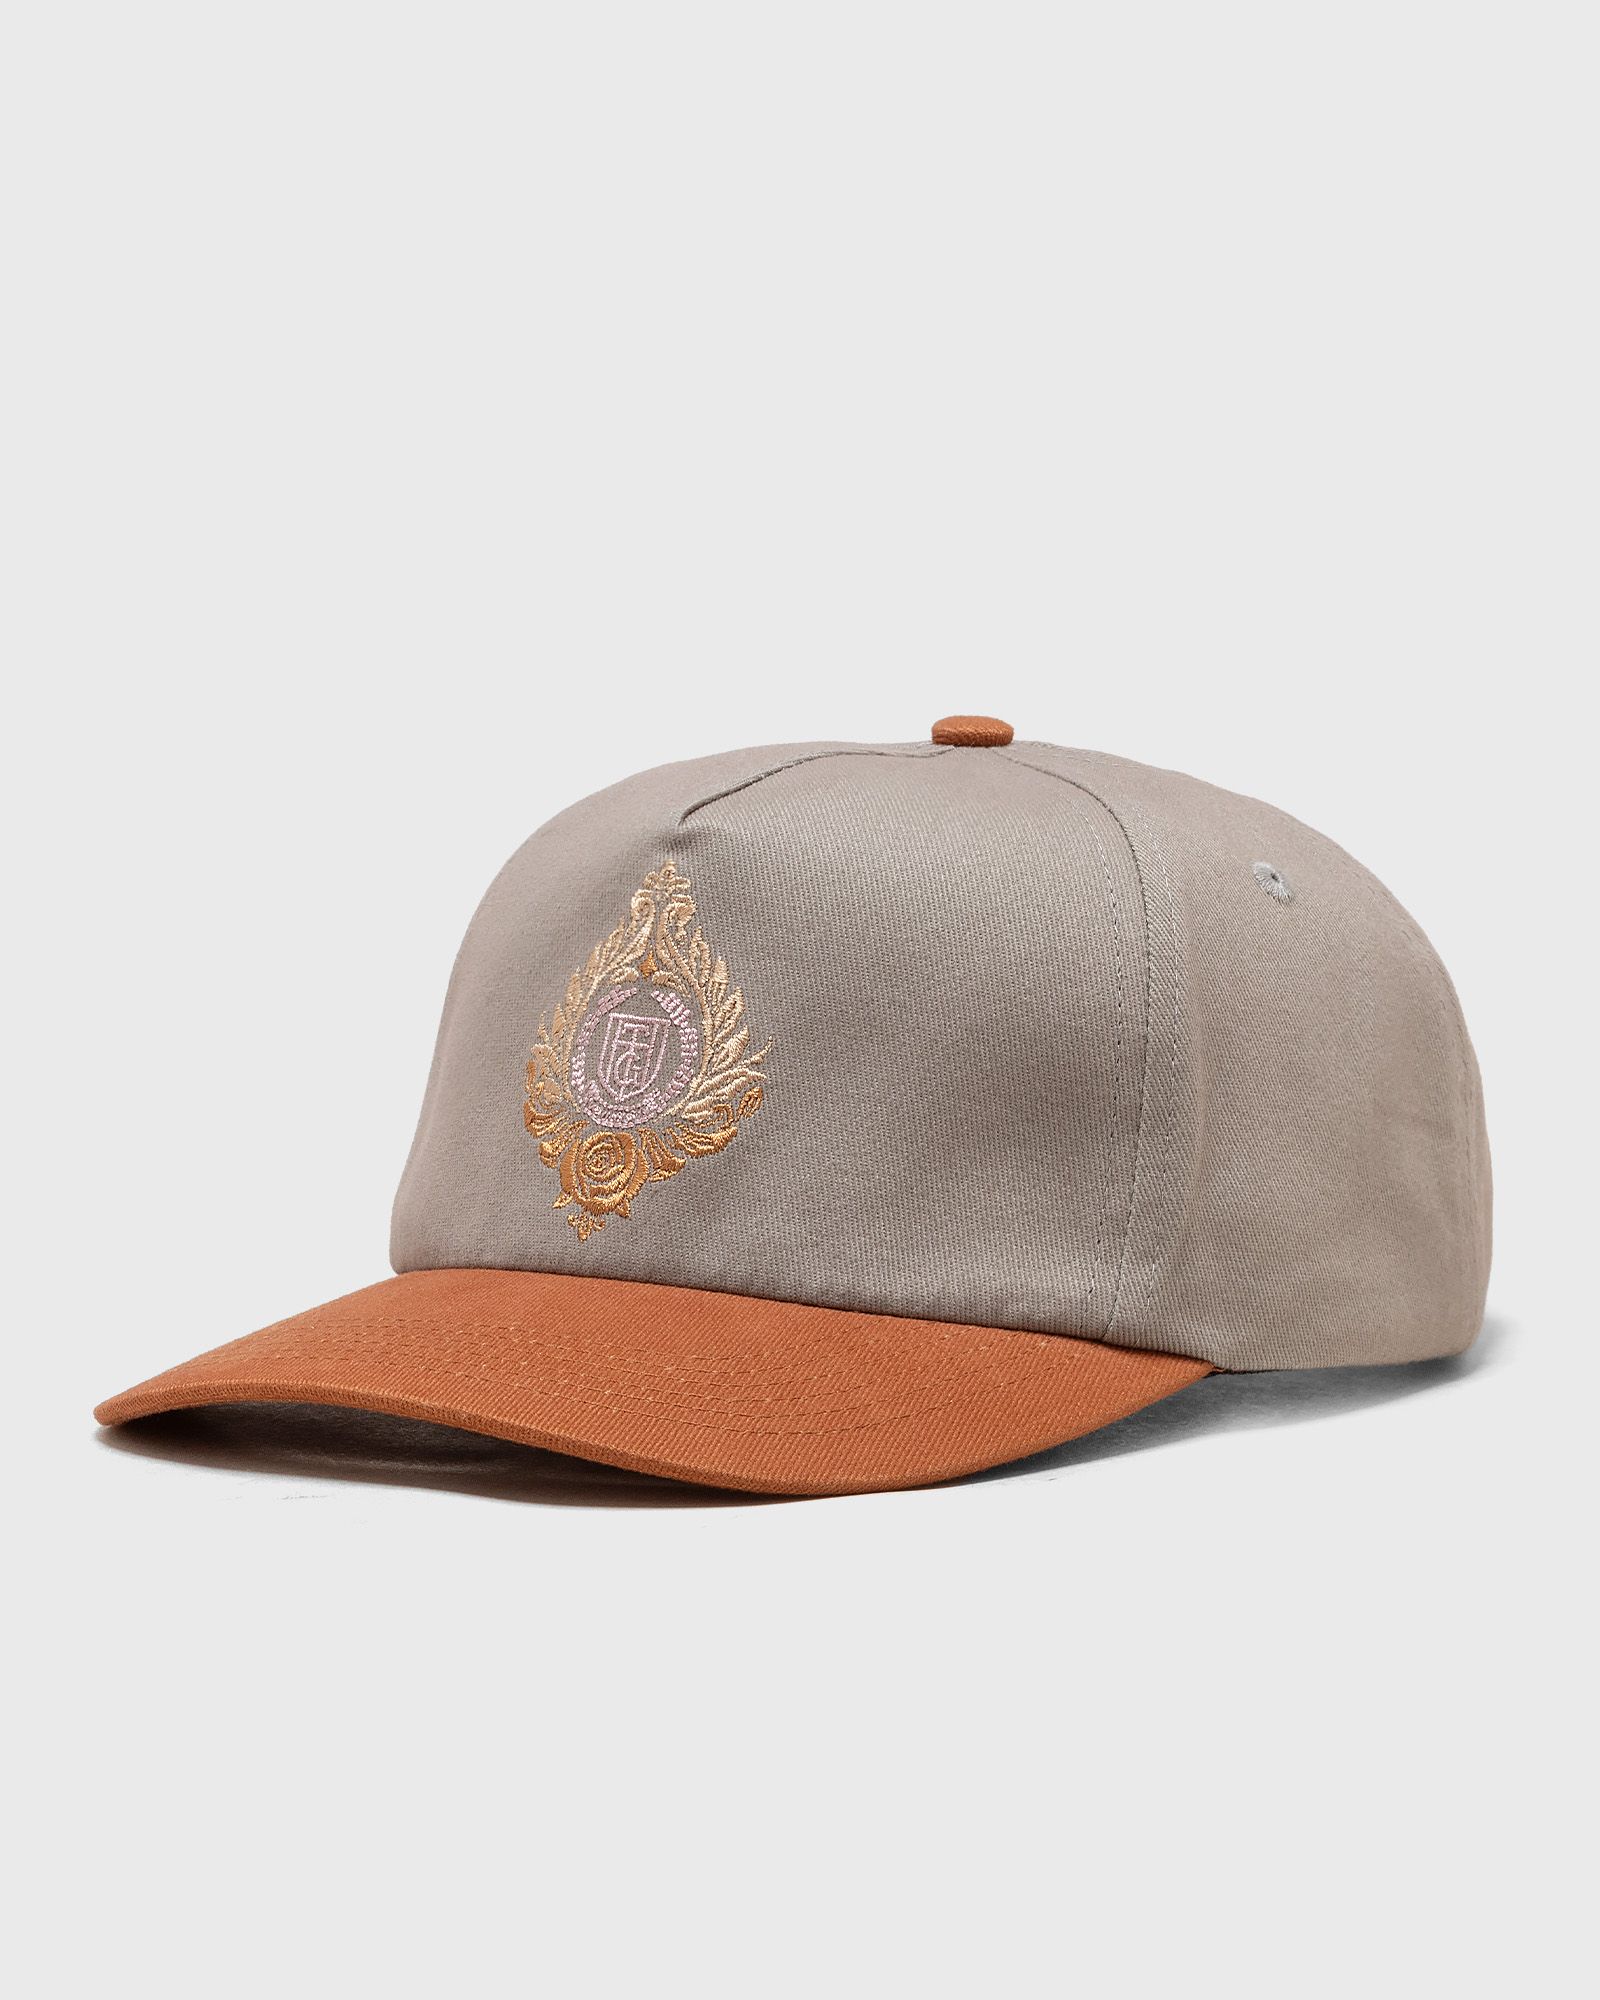 Honor The Gift - heritage crest logo hat men caps brown|beige in größe:one size